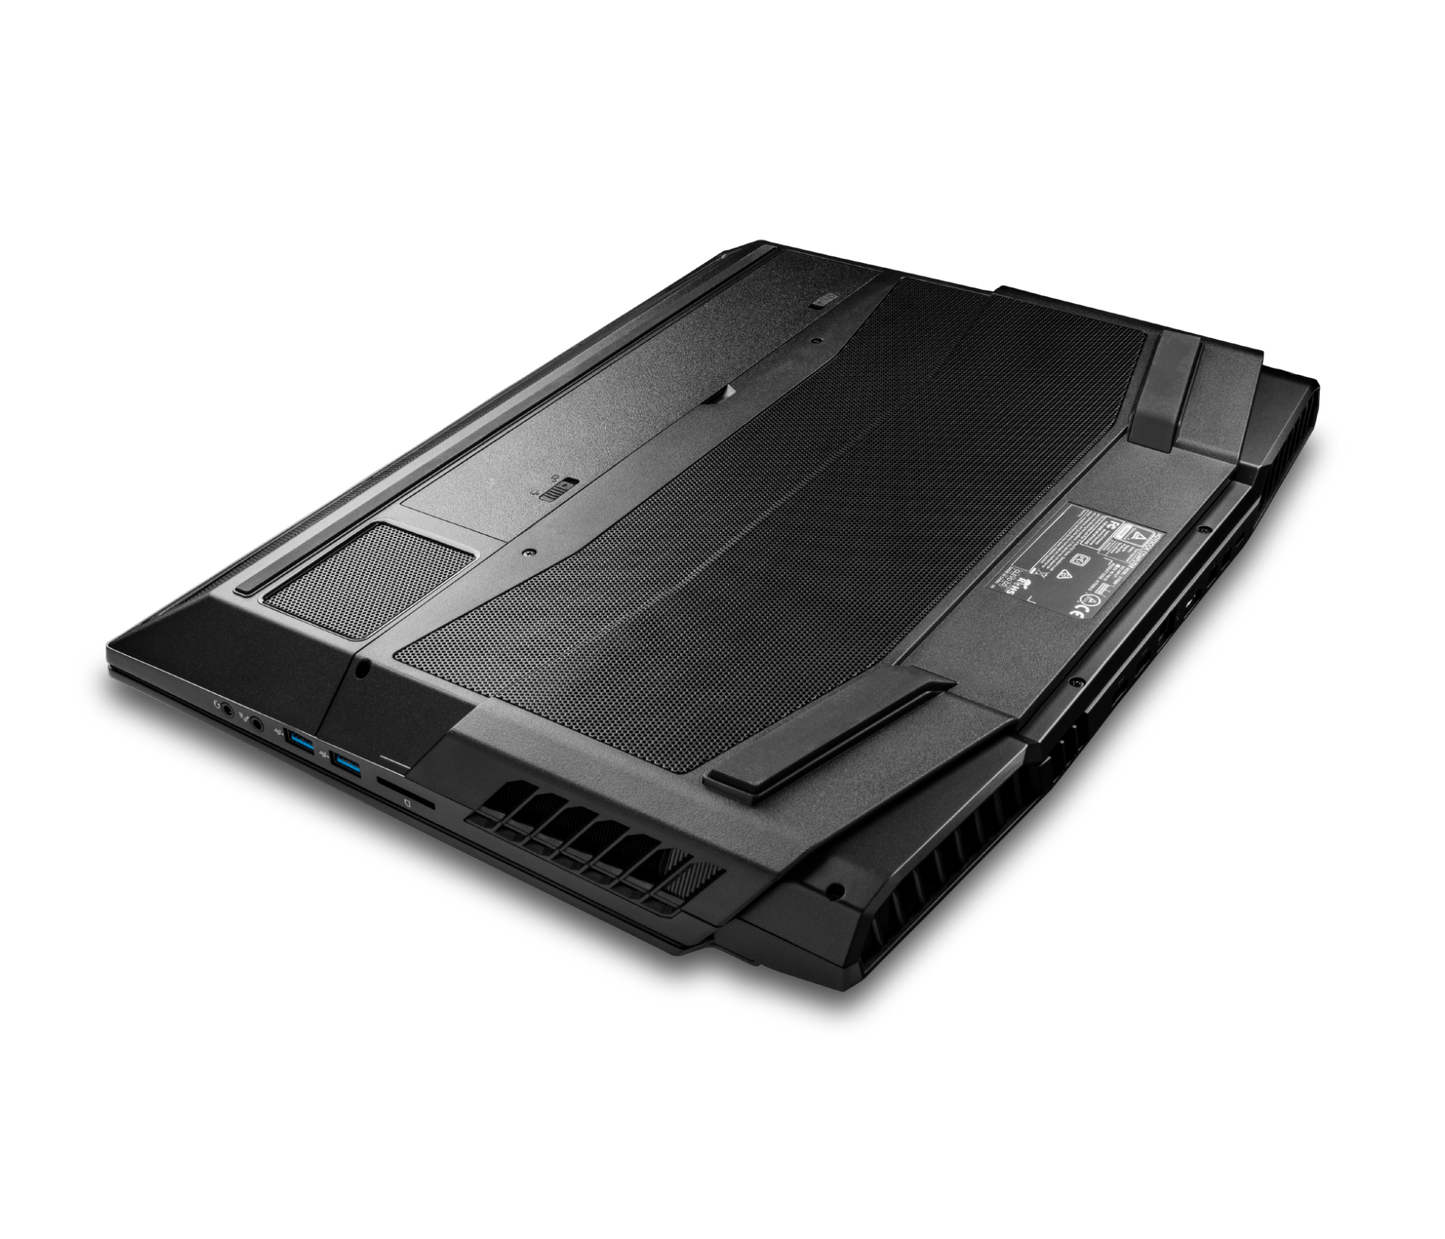 SAGER NP9672M-G1 (CLEVO X170KM-G) Gaming Laptop